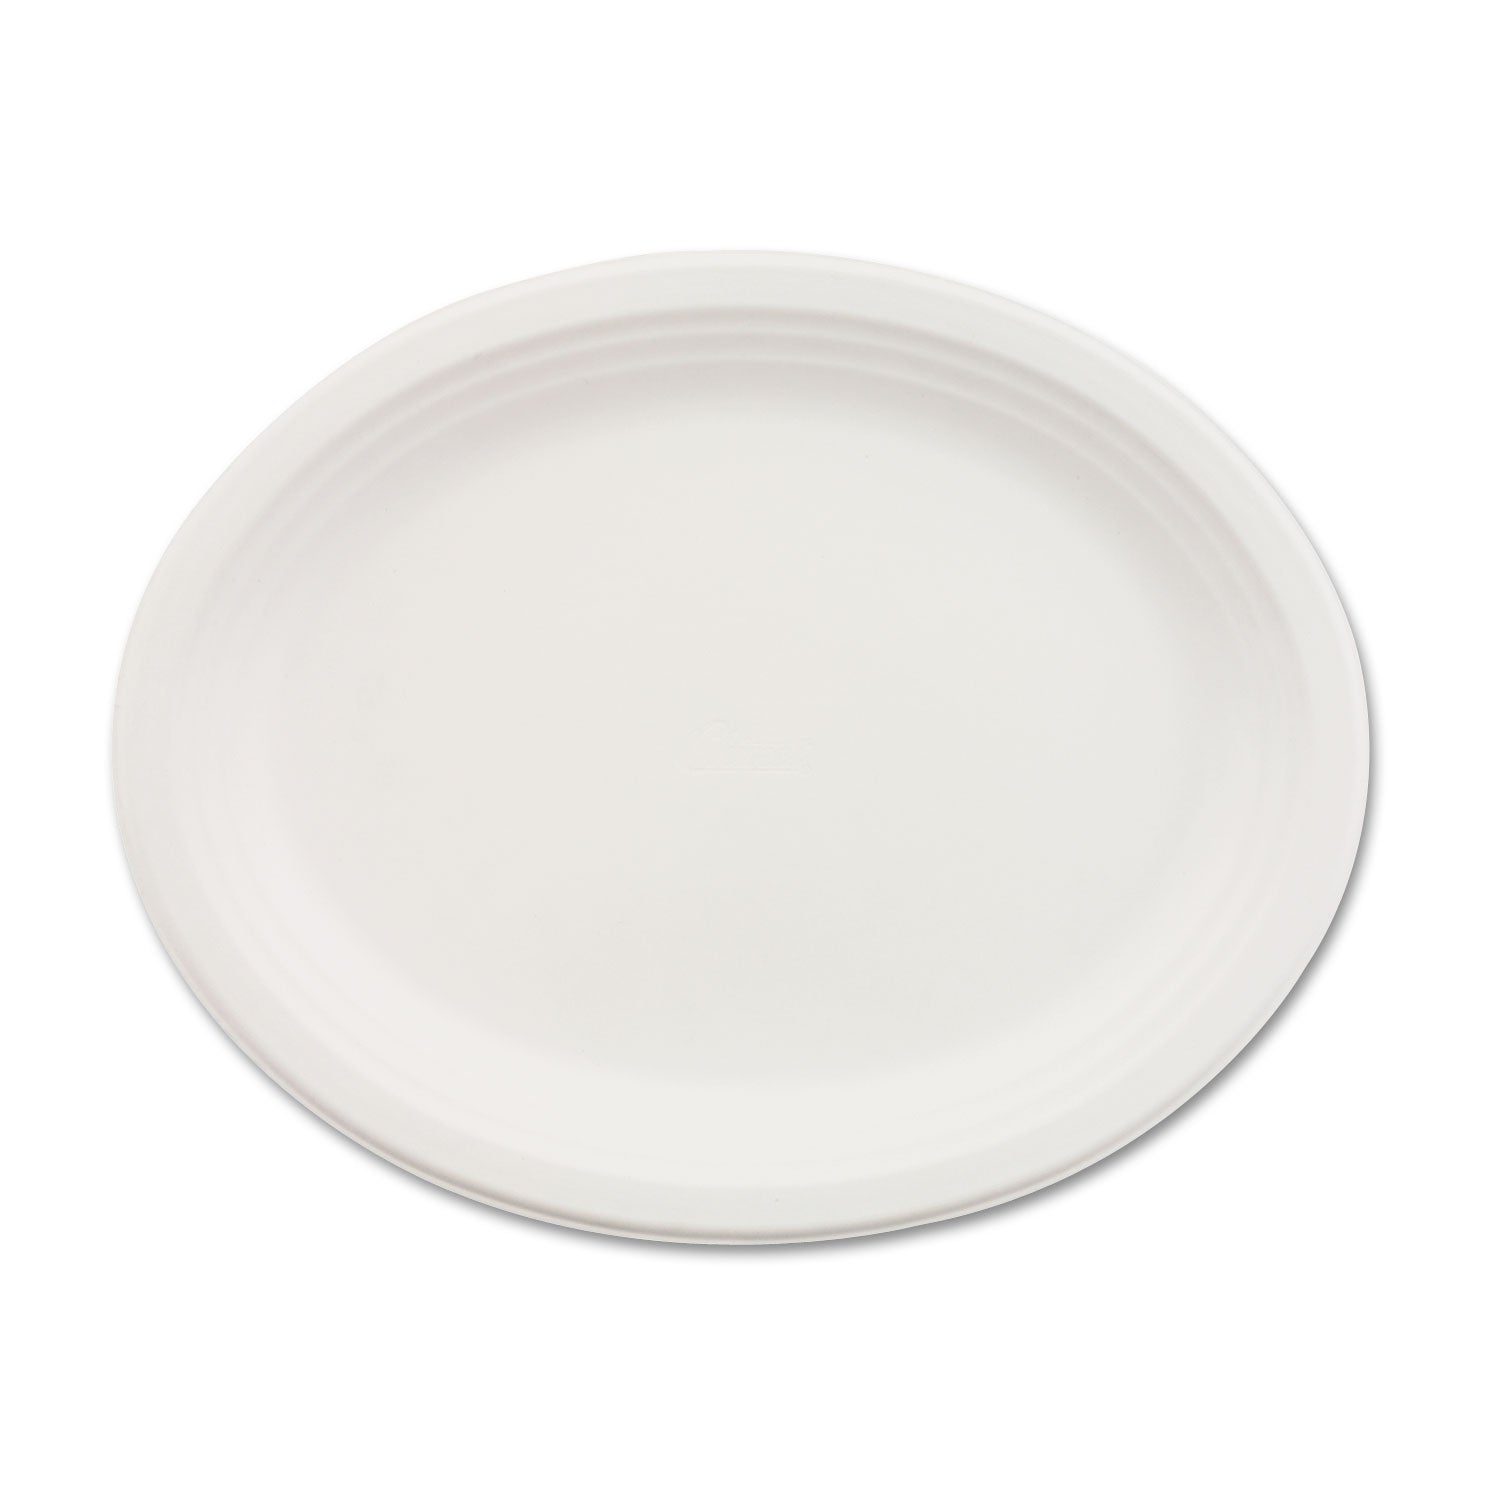 Classic Paper Dinnerware, Oval Platter, 9.75 x 12.5, White, 500/Carton - 